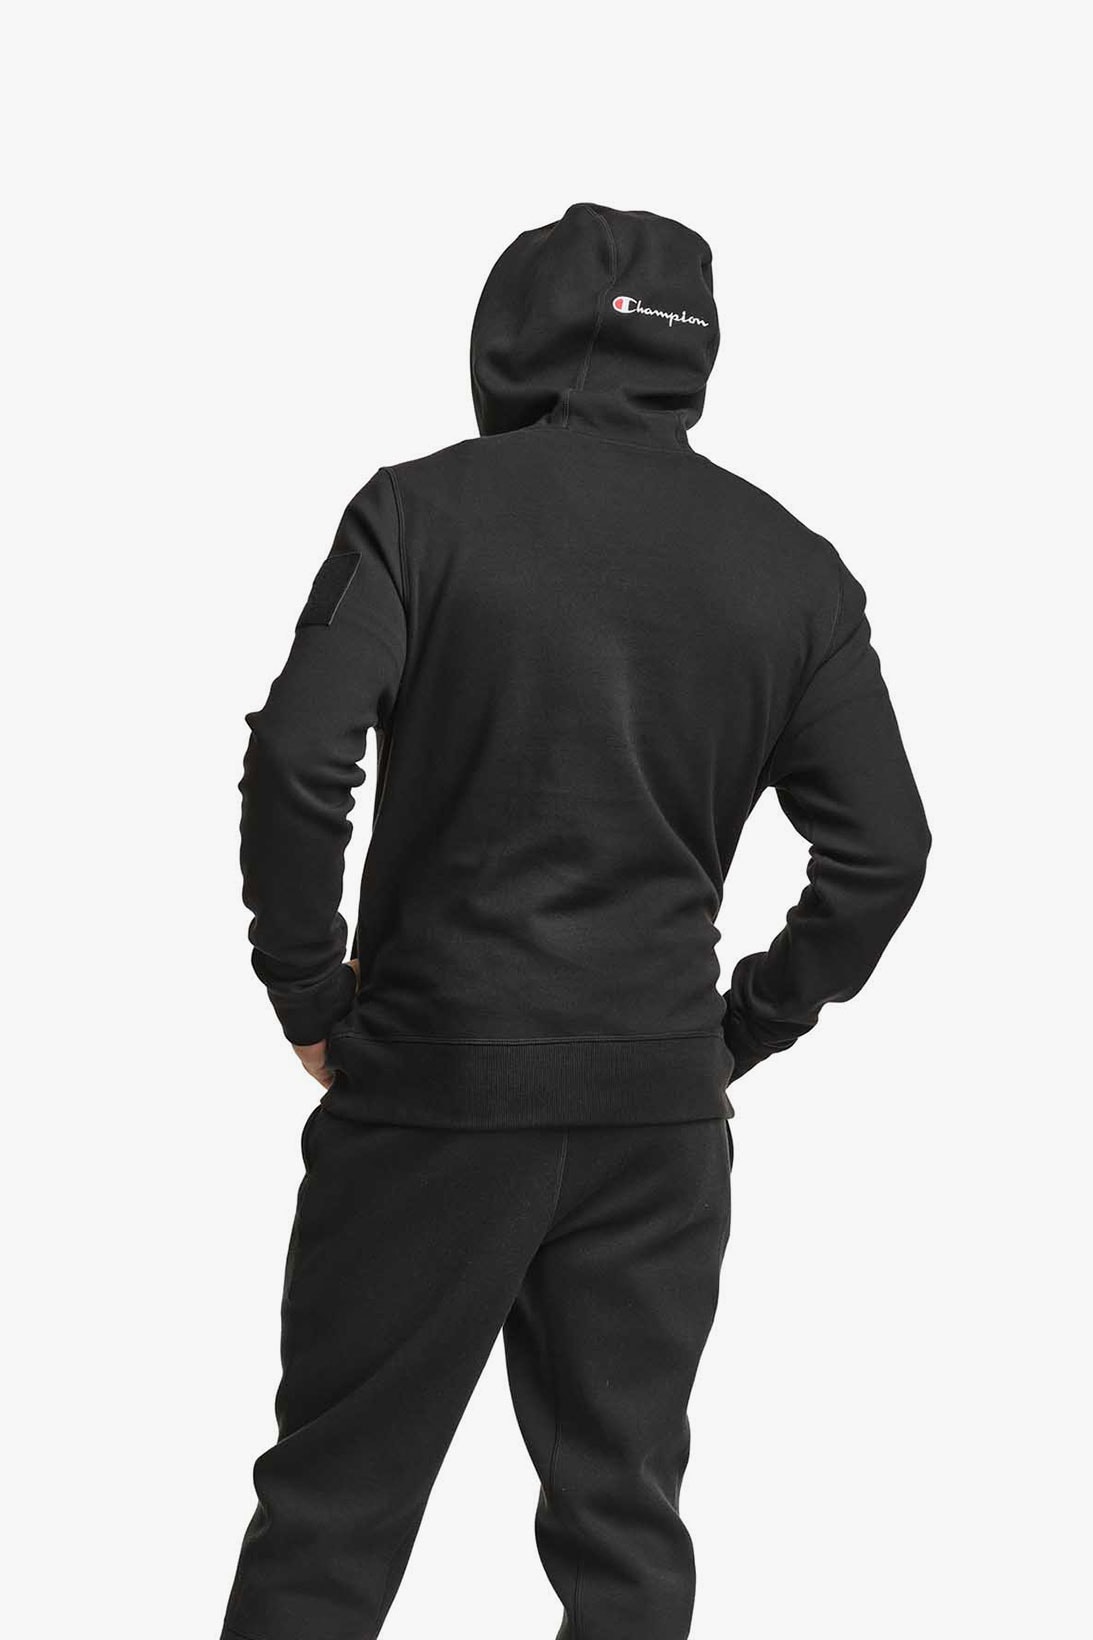 champion athletics gamer collection esports players hoodies sweatpants black gray fleece